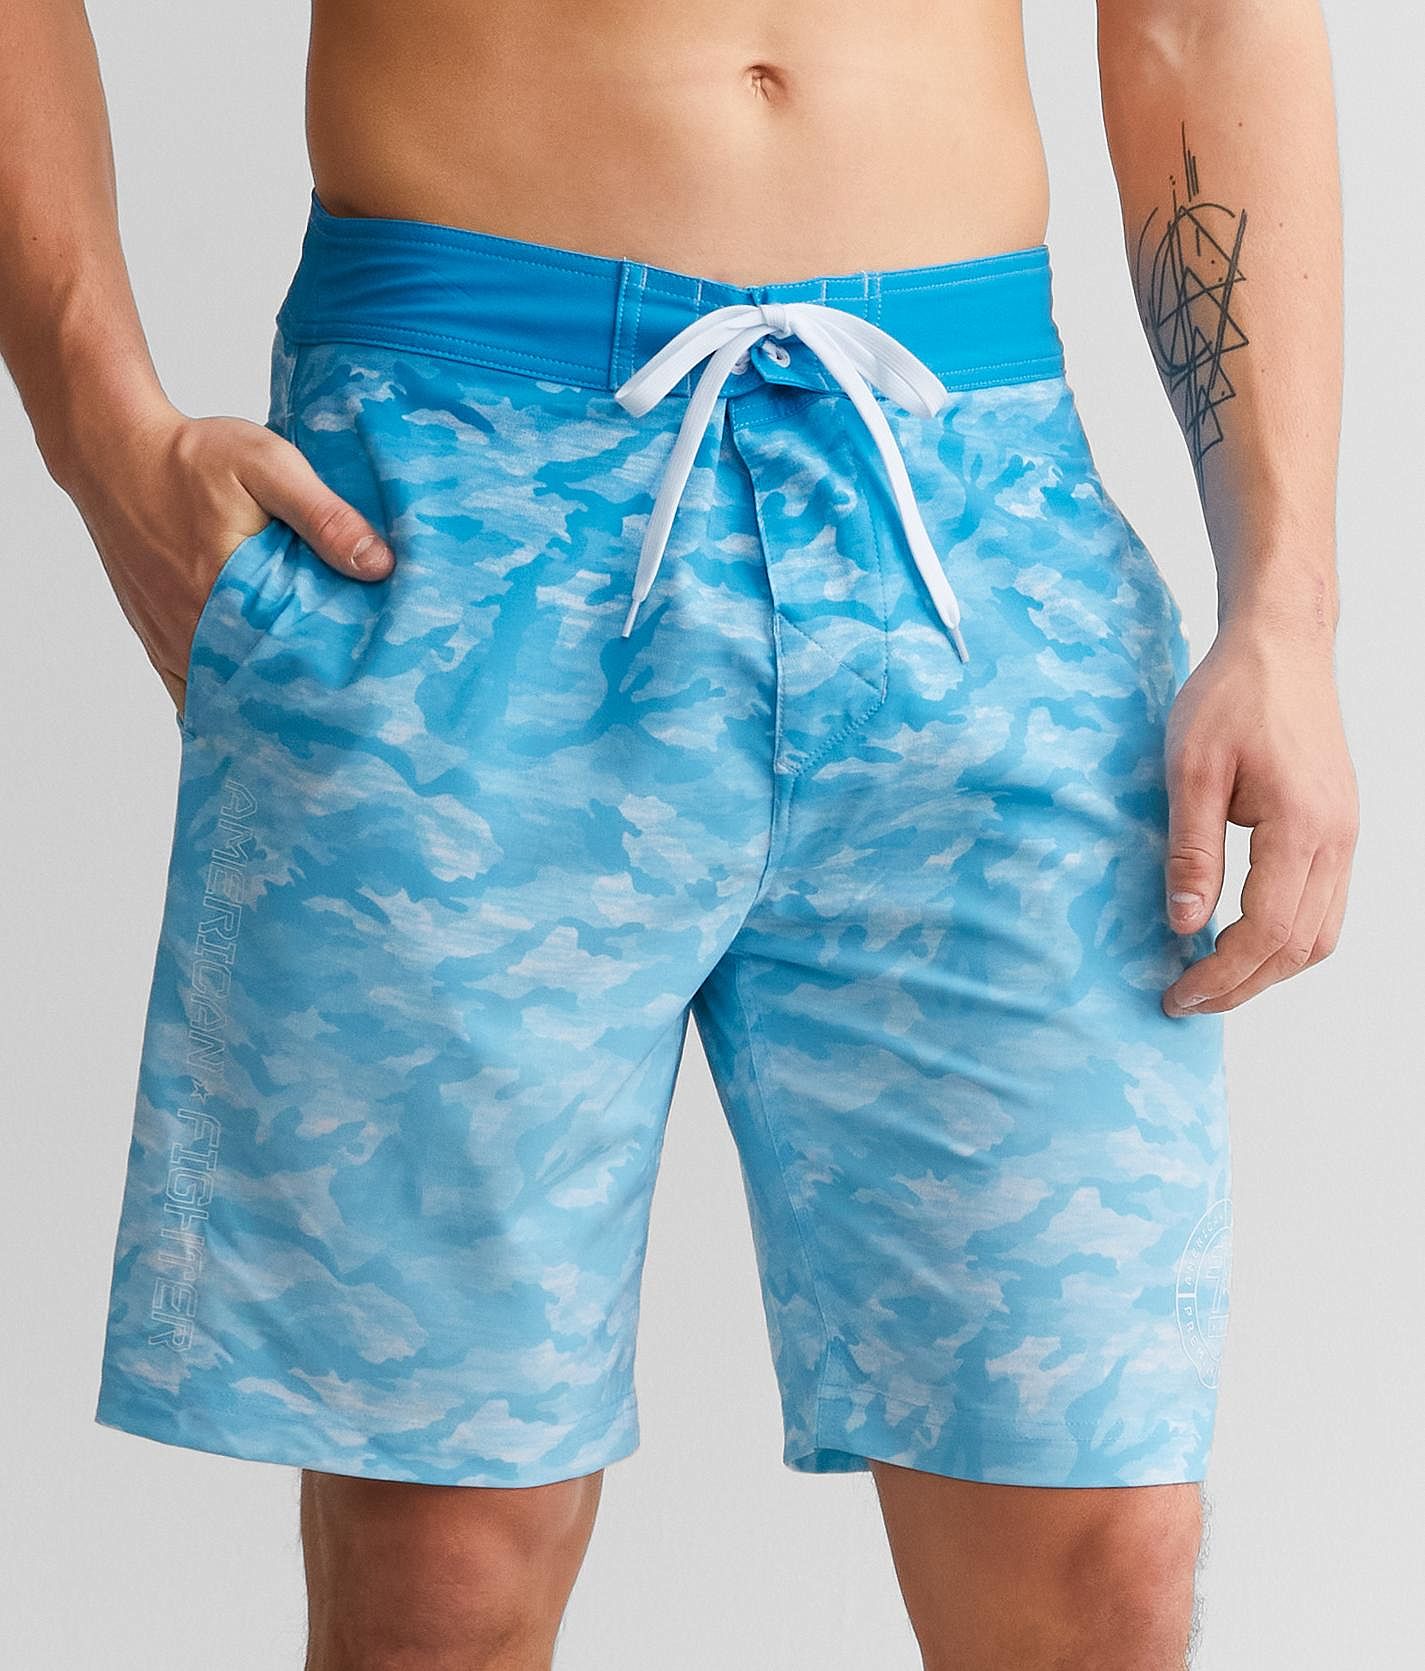 Graif Clothing Hook&Tackle Hi-Tide Blue Shorts 42